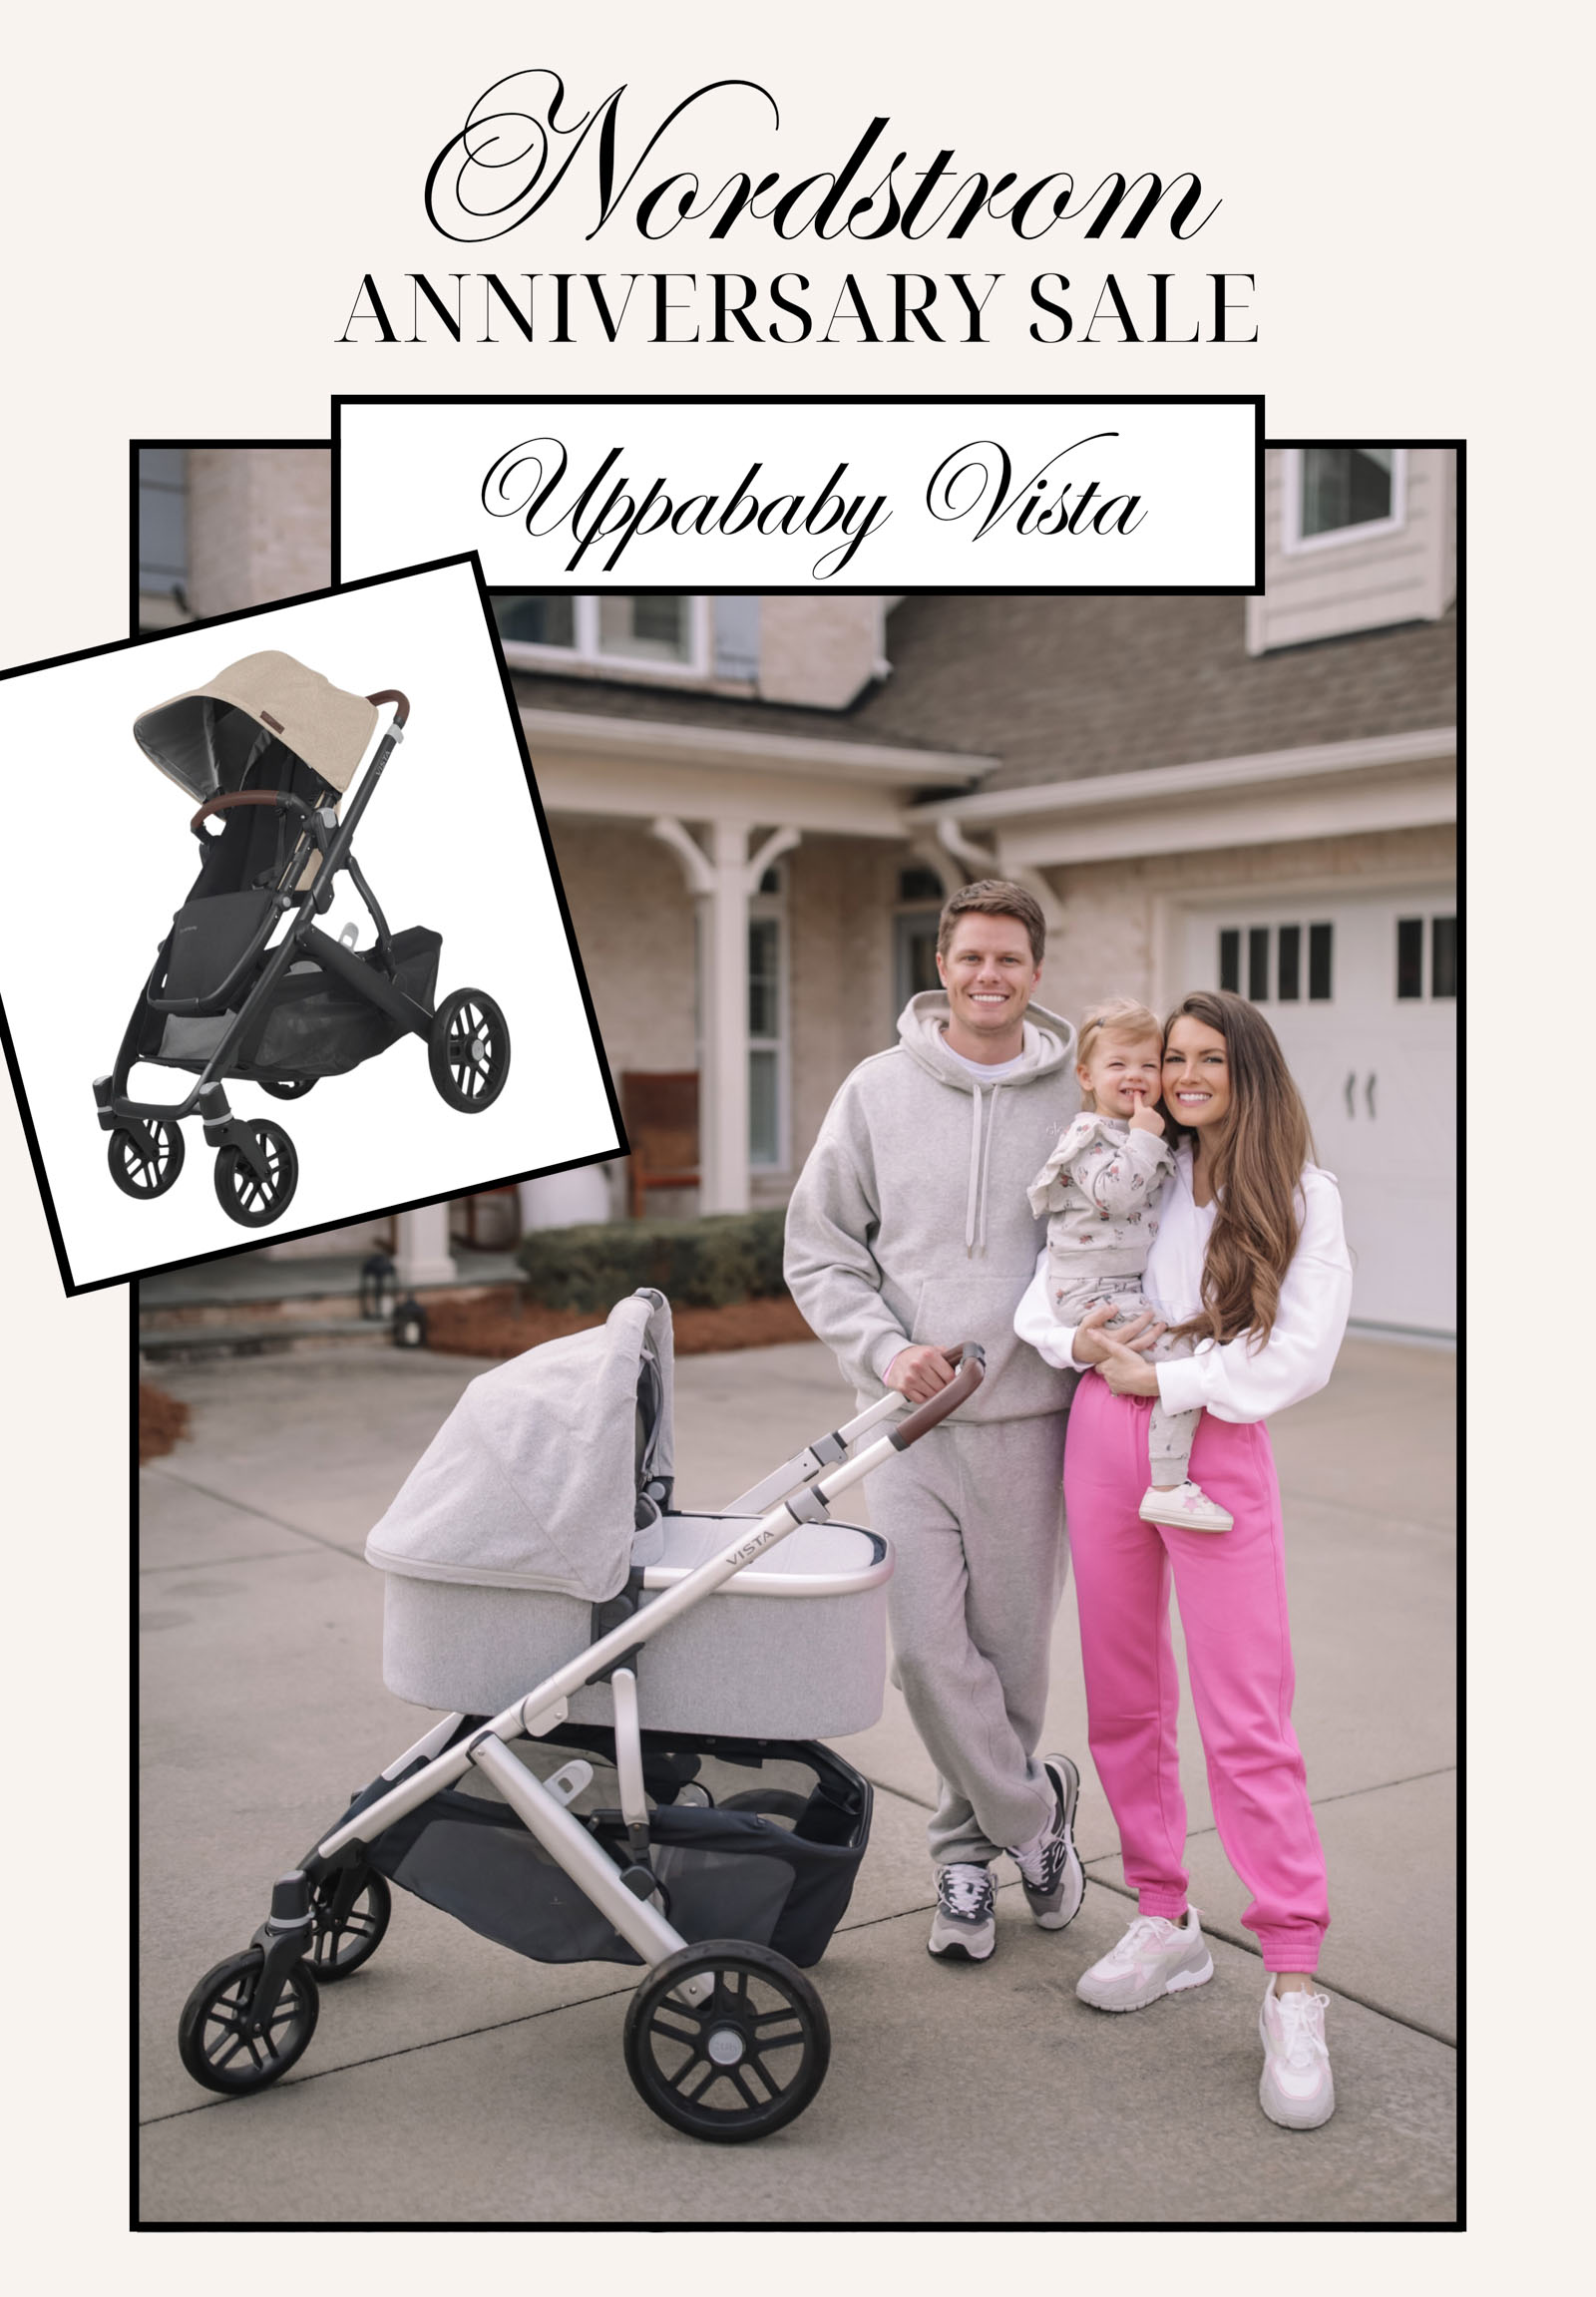 Nordstrom Anniversary Sale Uppababy Vista stroller